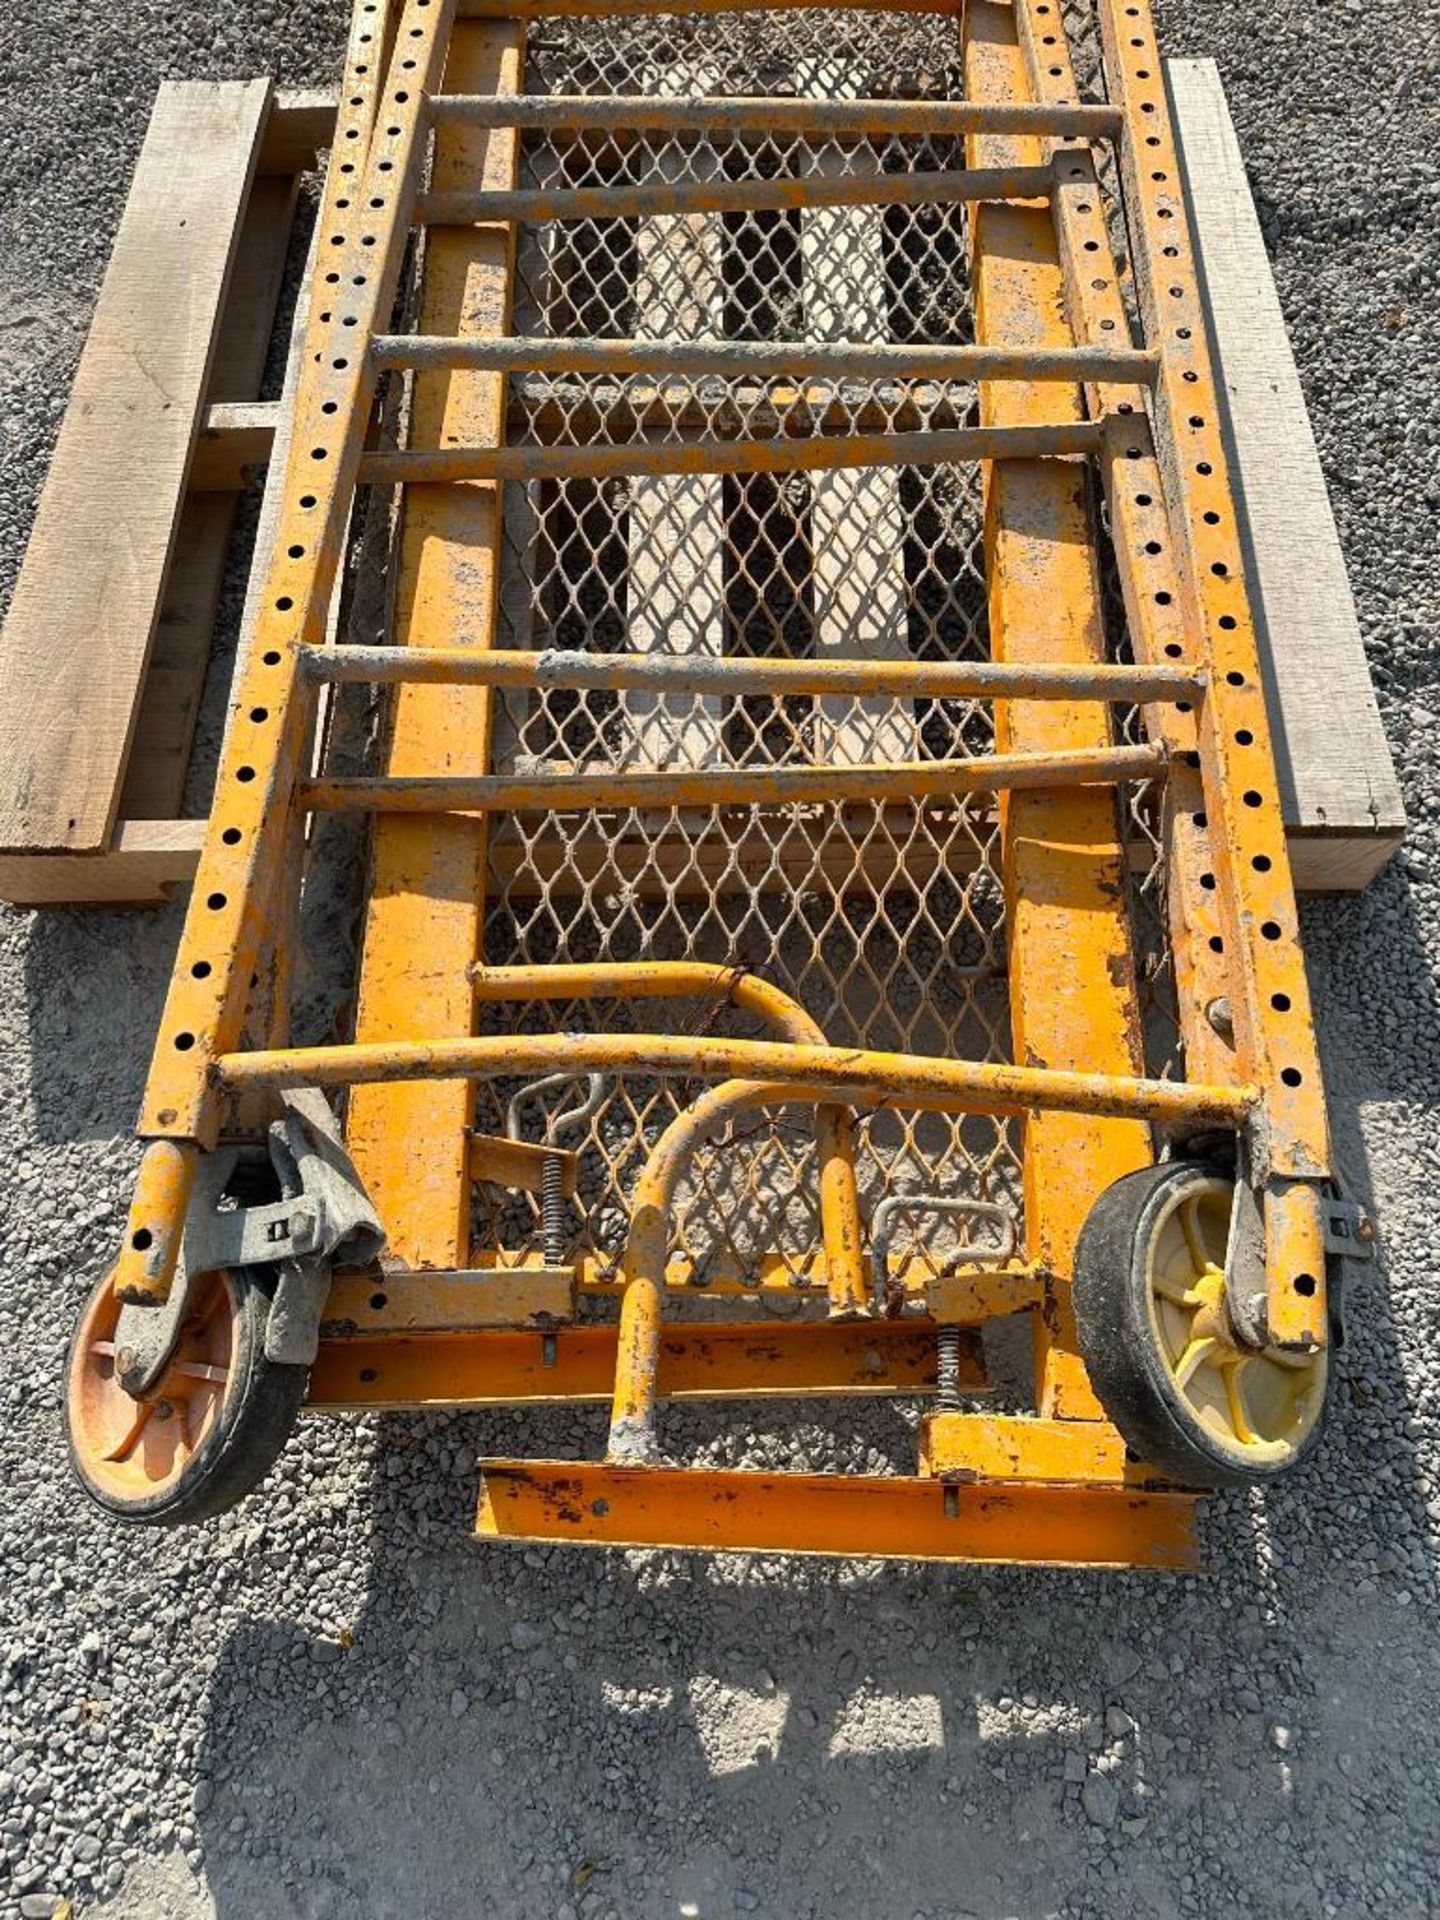 Bil-Jax 6' steel rolling scaffolding, located in Mt. Pleasant, IA. - Image 2 of 4